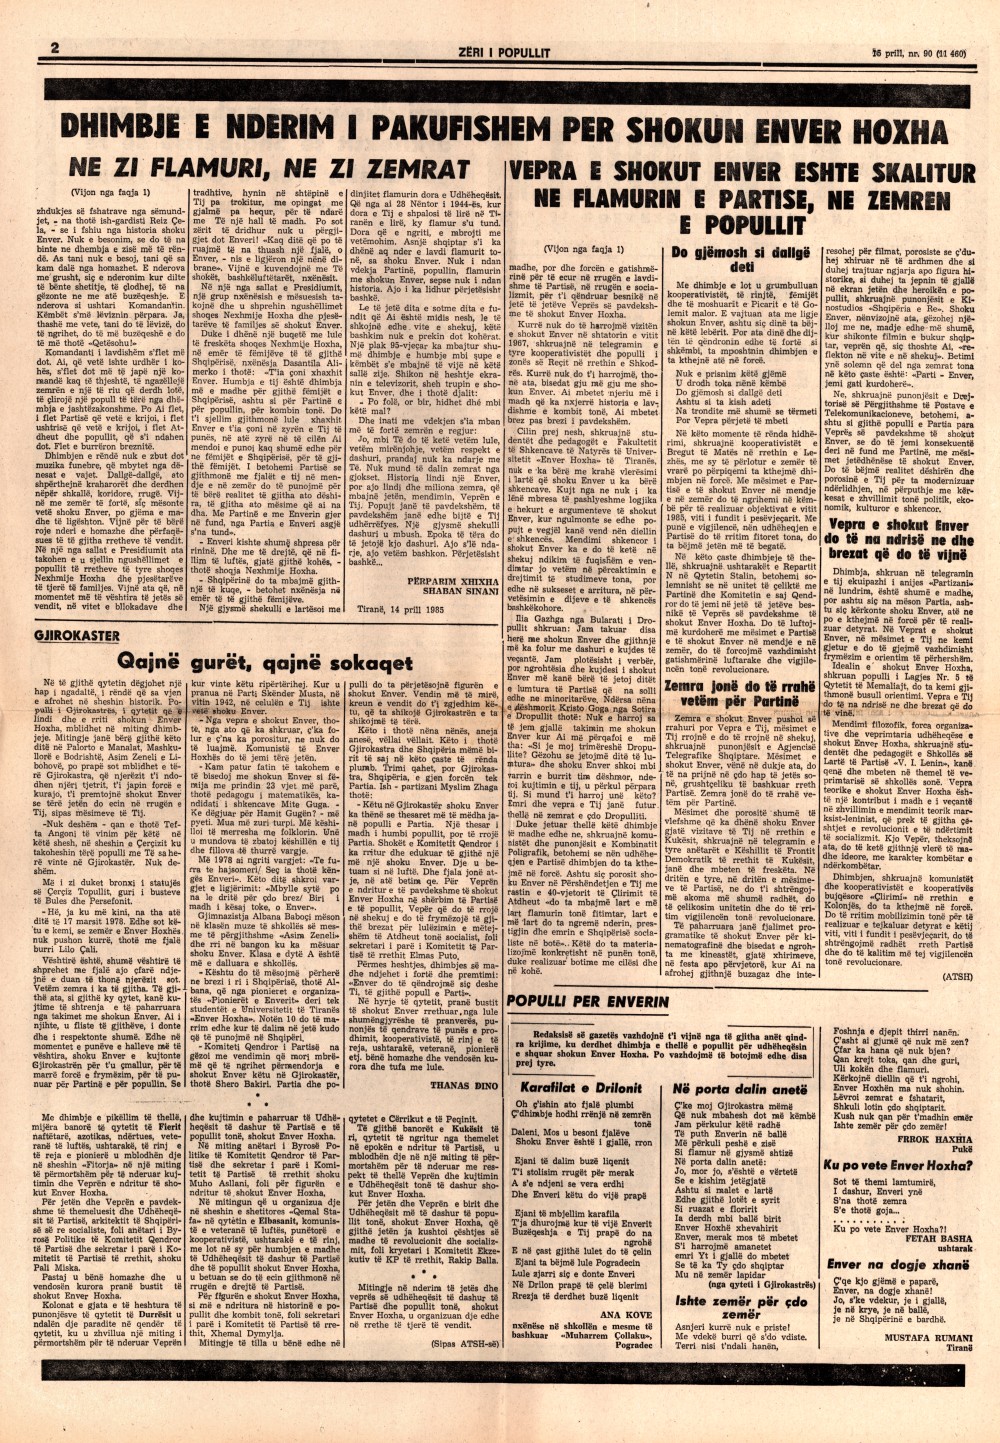 Газета "Зери и популлит" от 15 апреля 1985 года (вторая полоса)